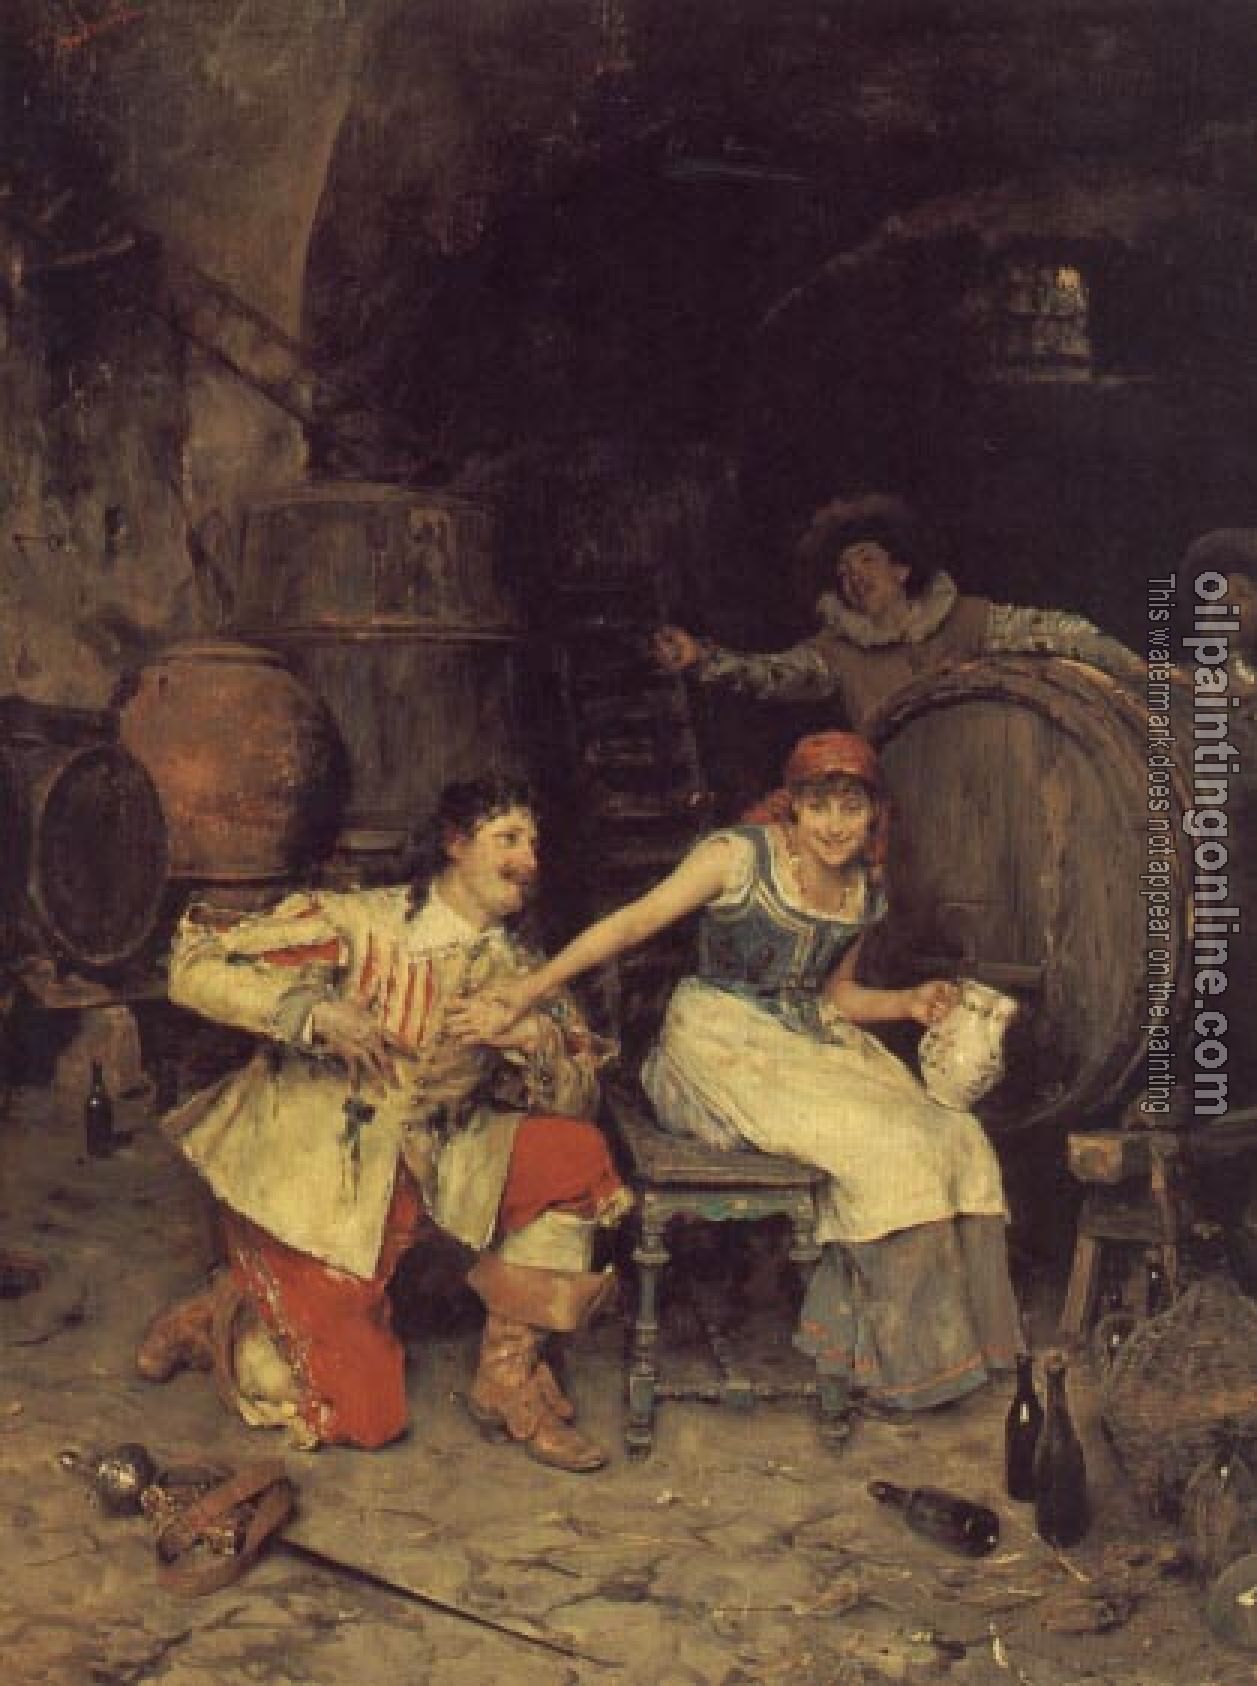 Federico Andreotti - Flirtation in the Wine Cellar